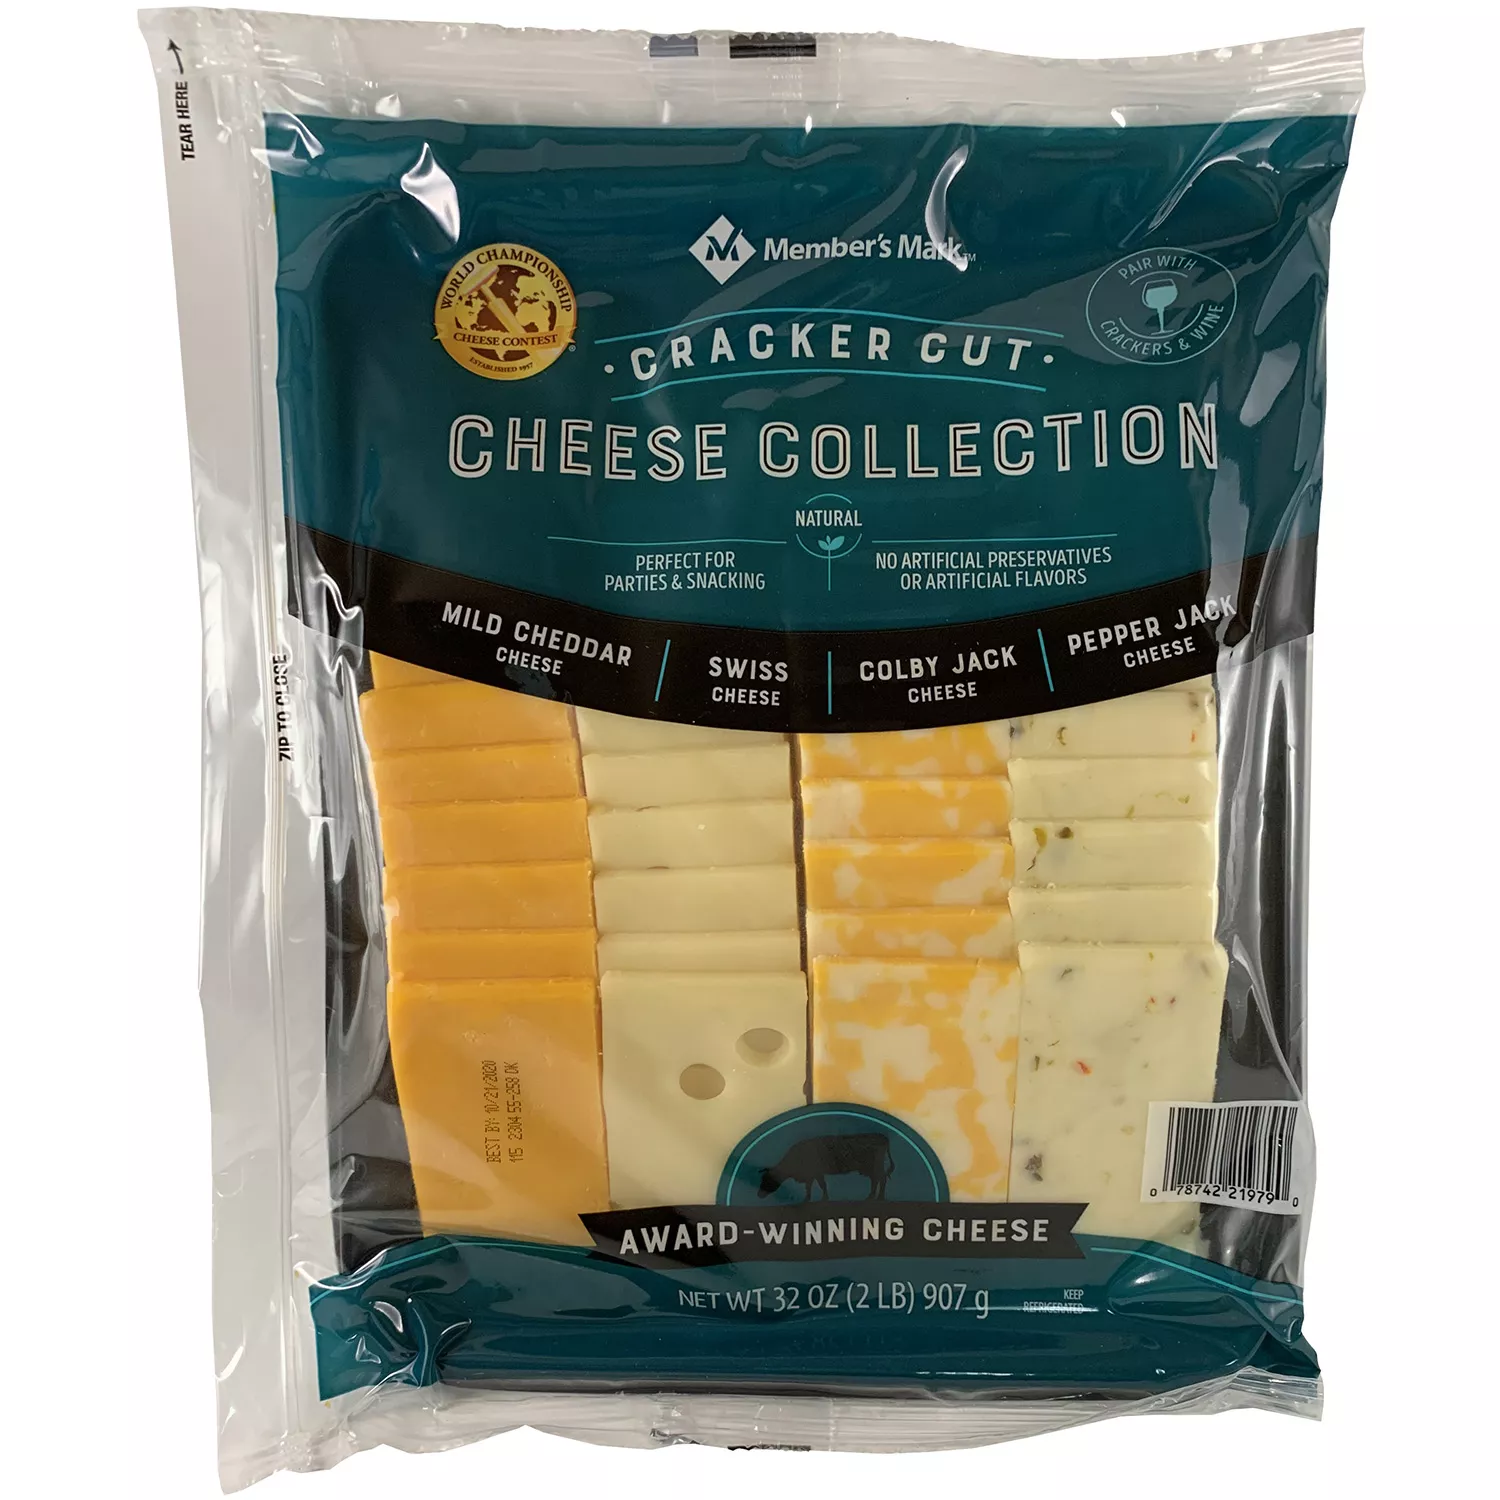 Member's Mark Cracker Cut Cheese